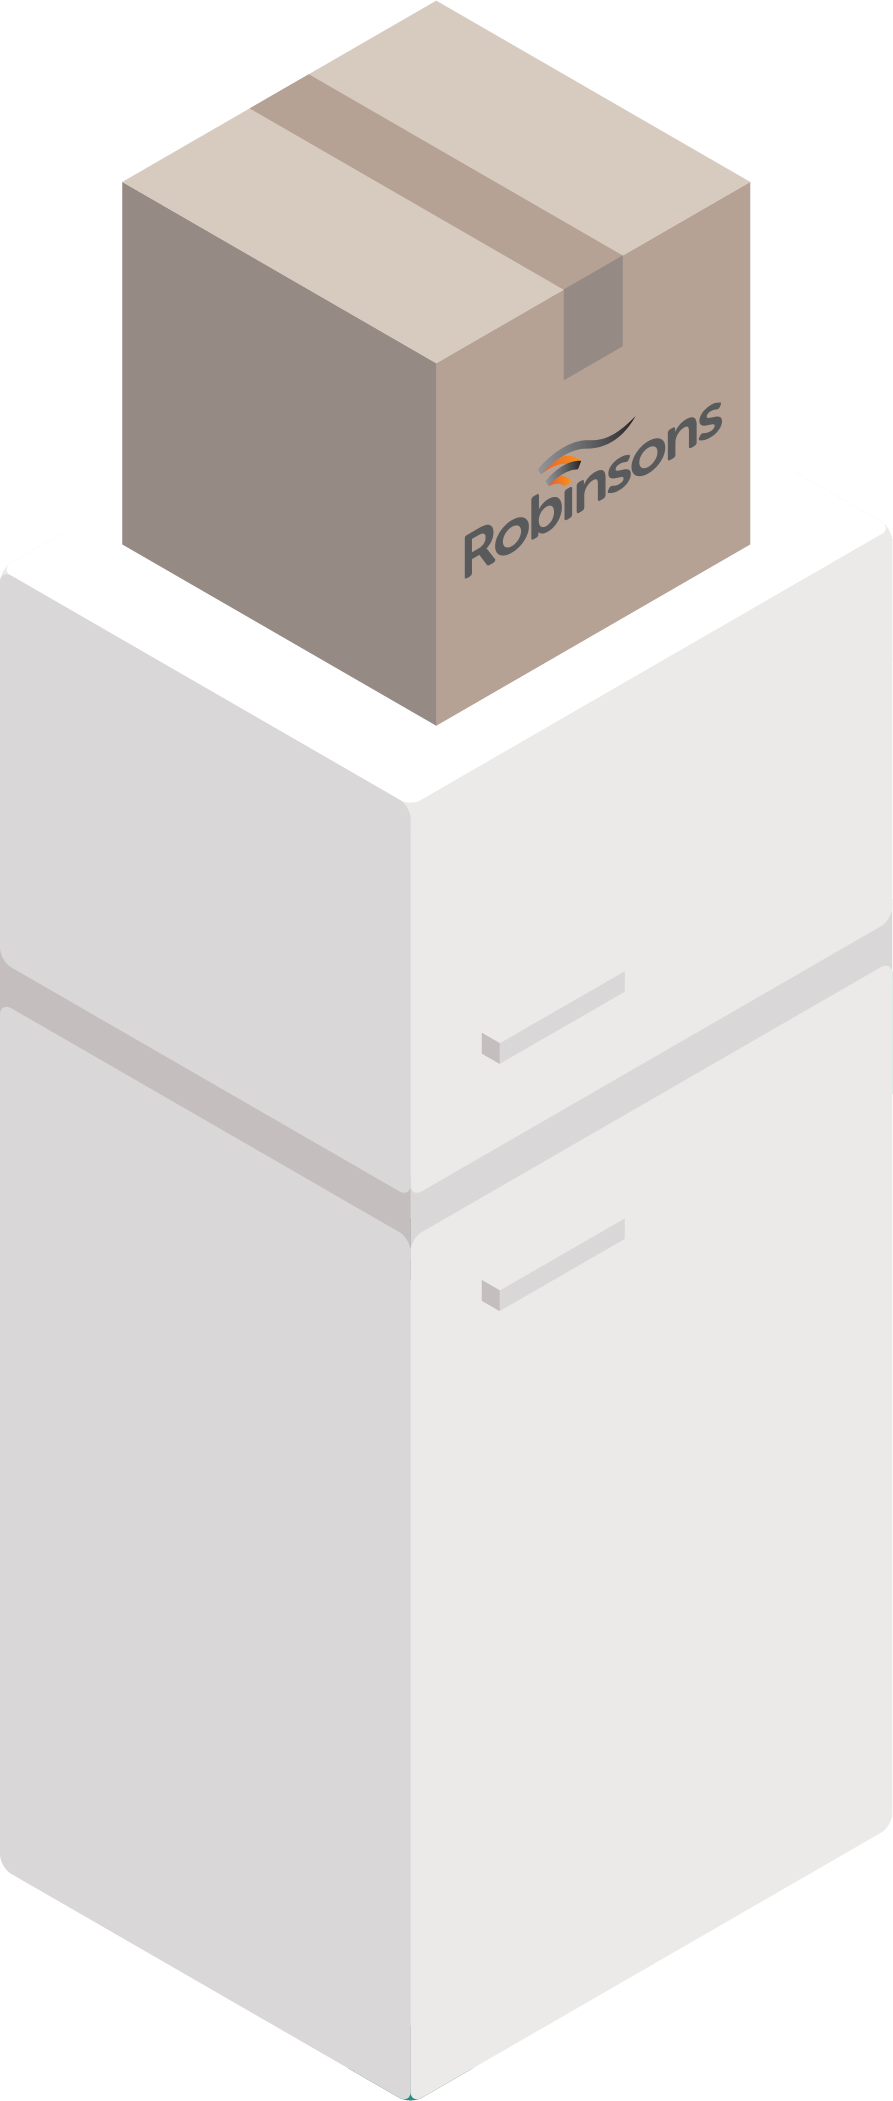 Small - Personal Storage - Fridge, Box